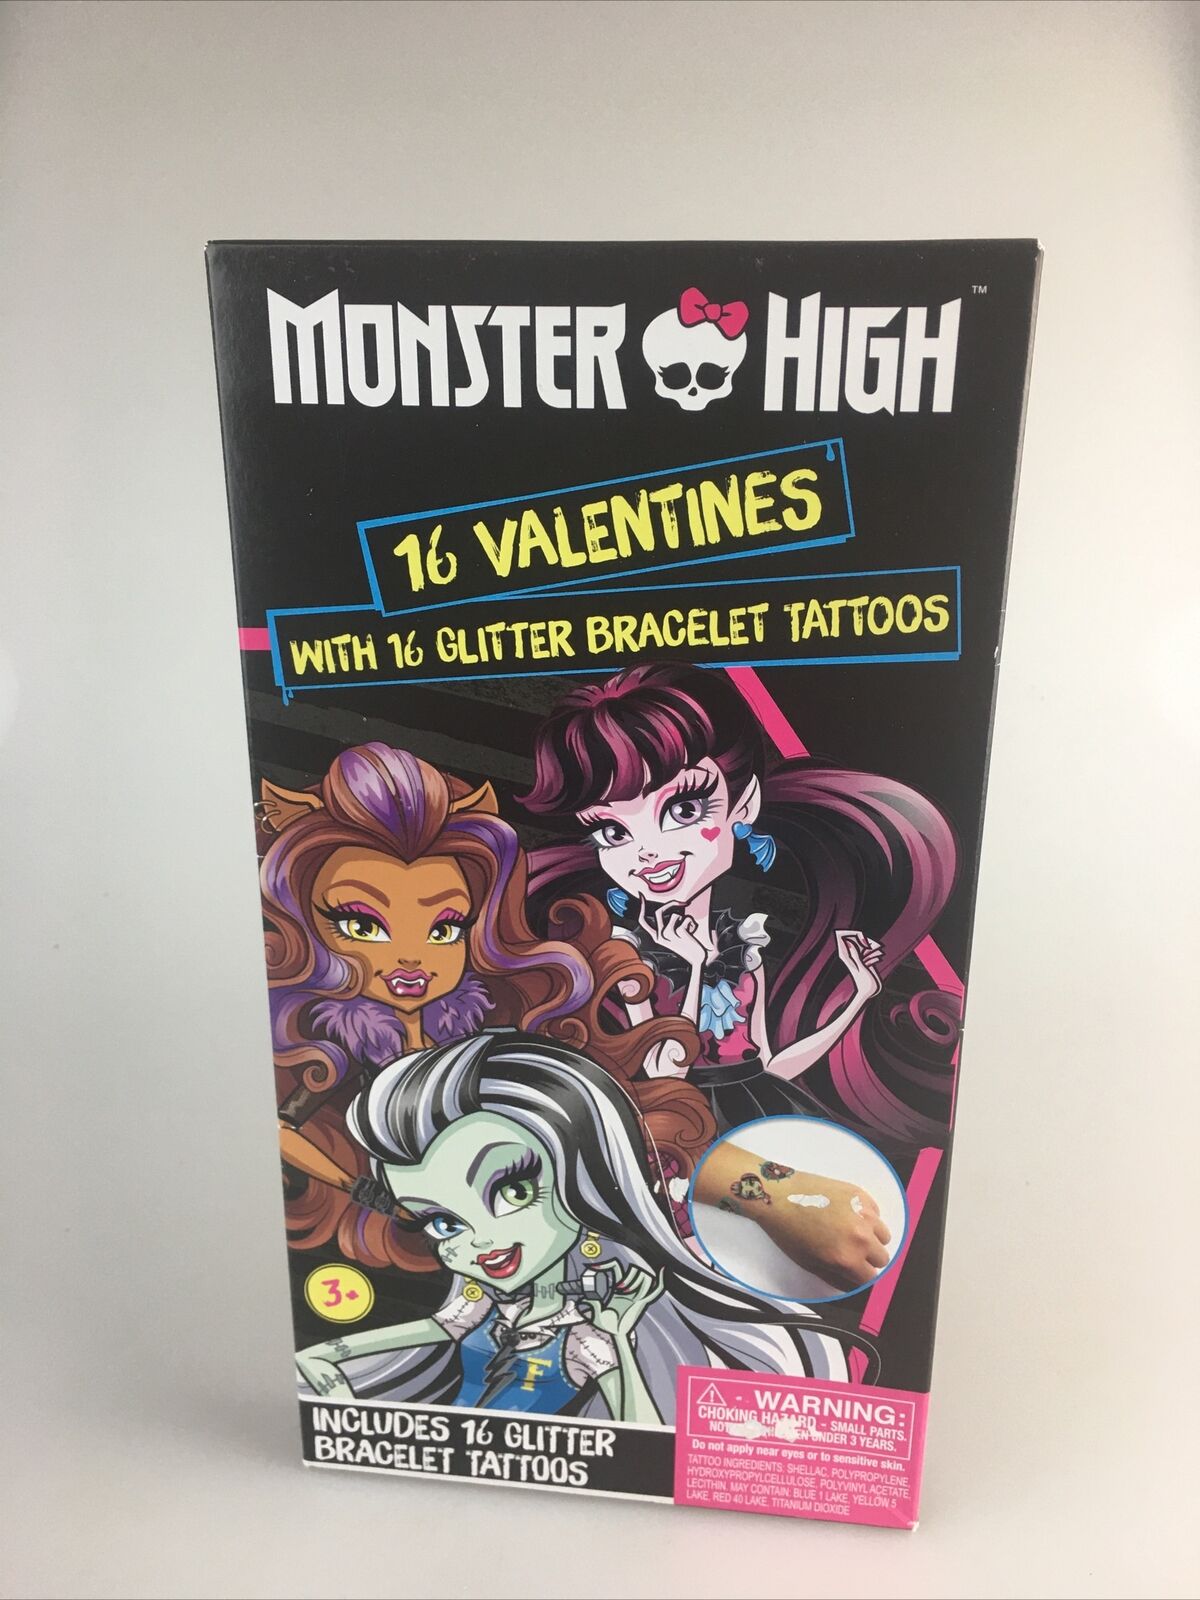 Monster High 16 Valentines Day Cards & Glitter Bracelet Tattoos Girl Friends NEW